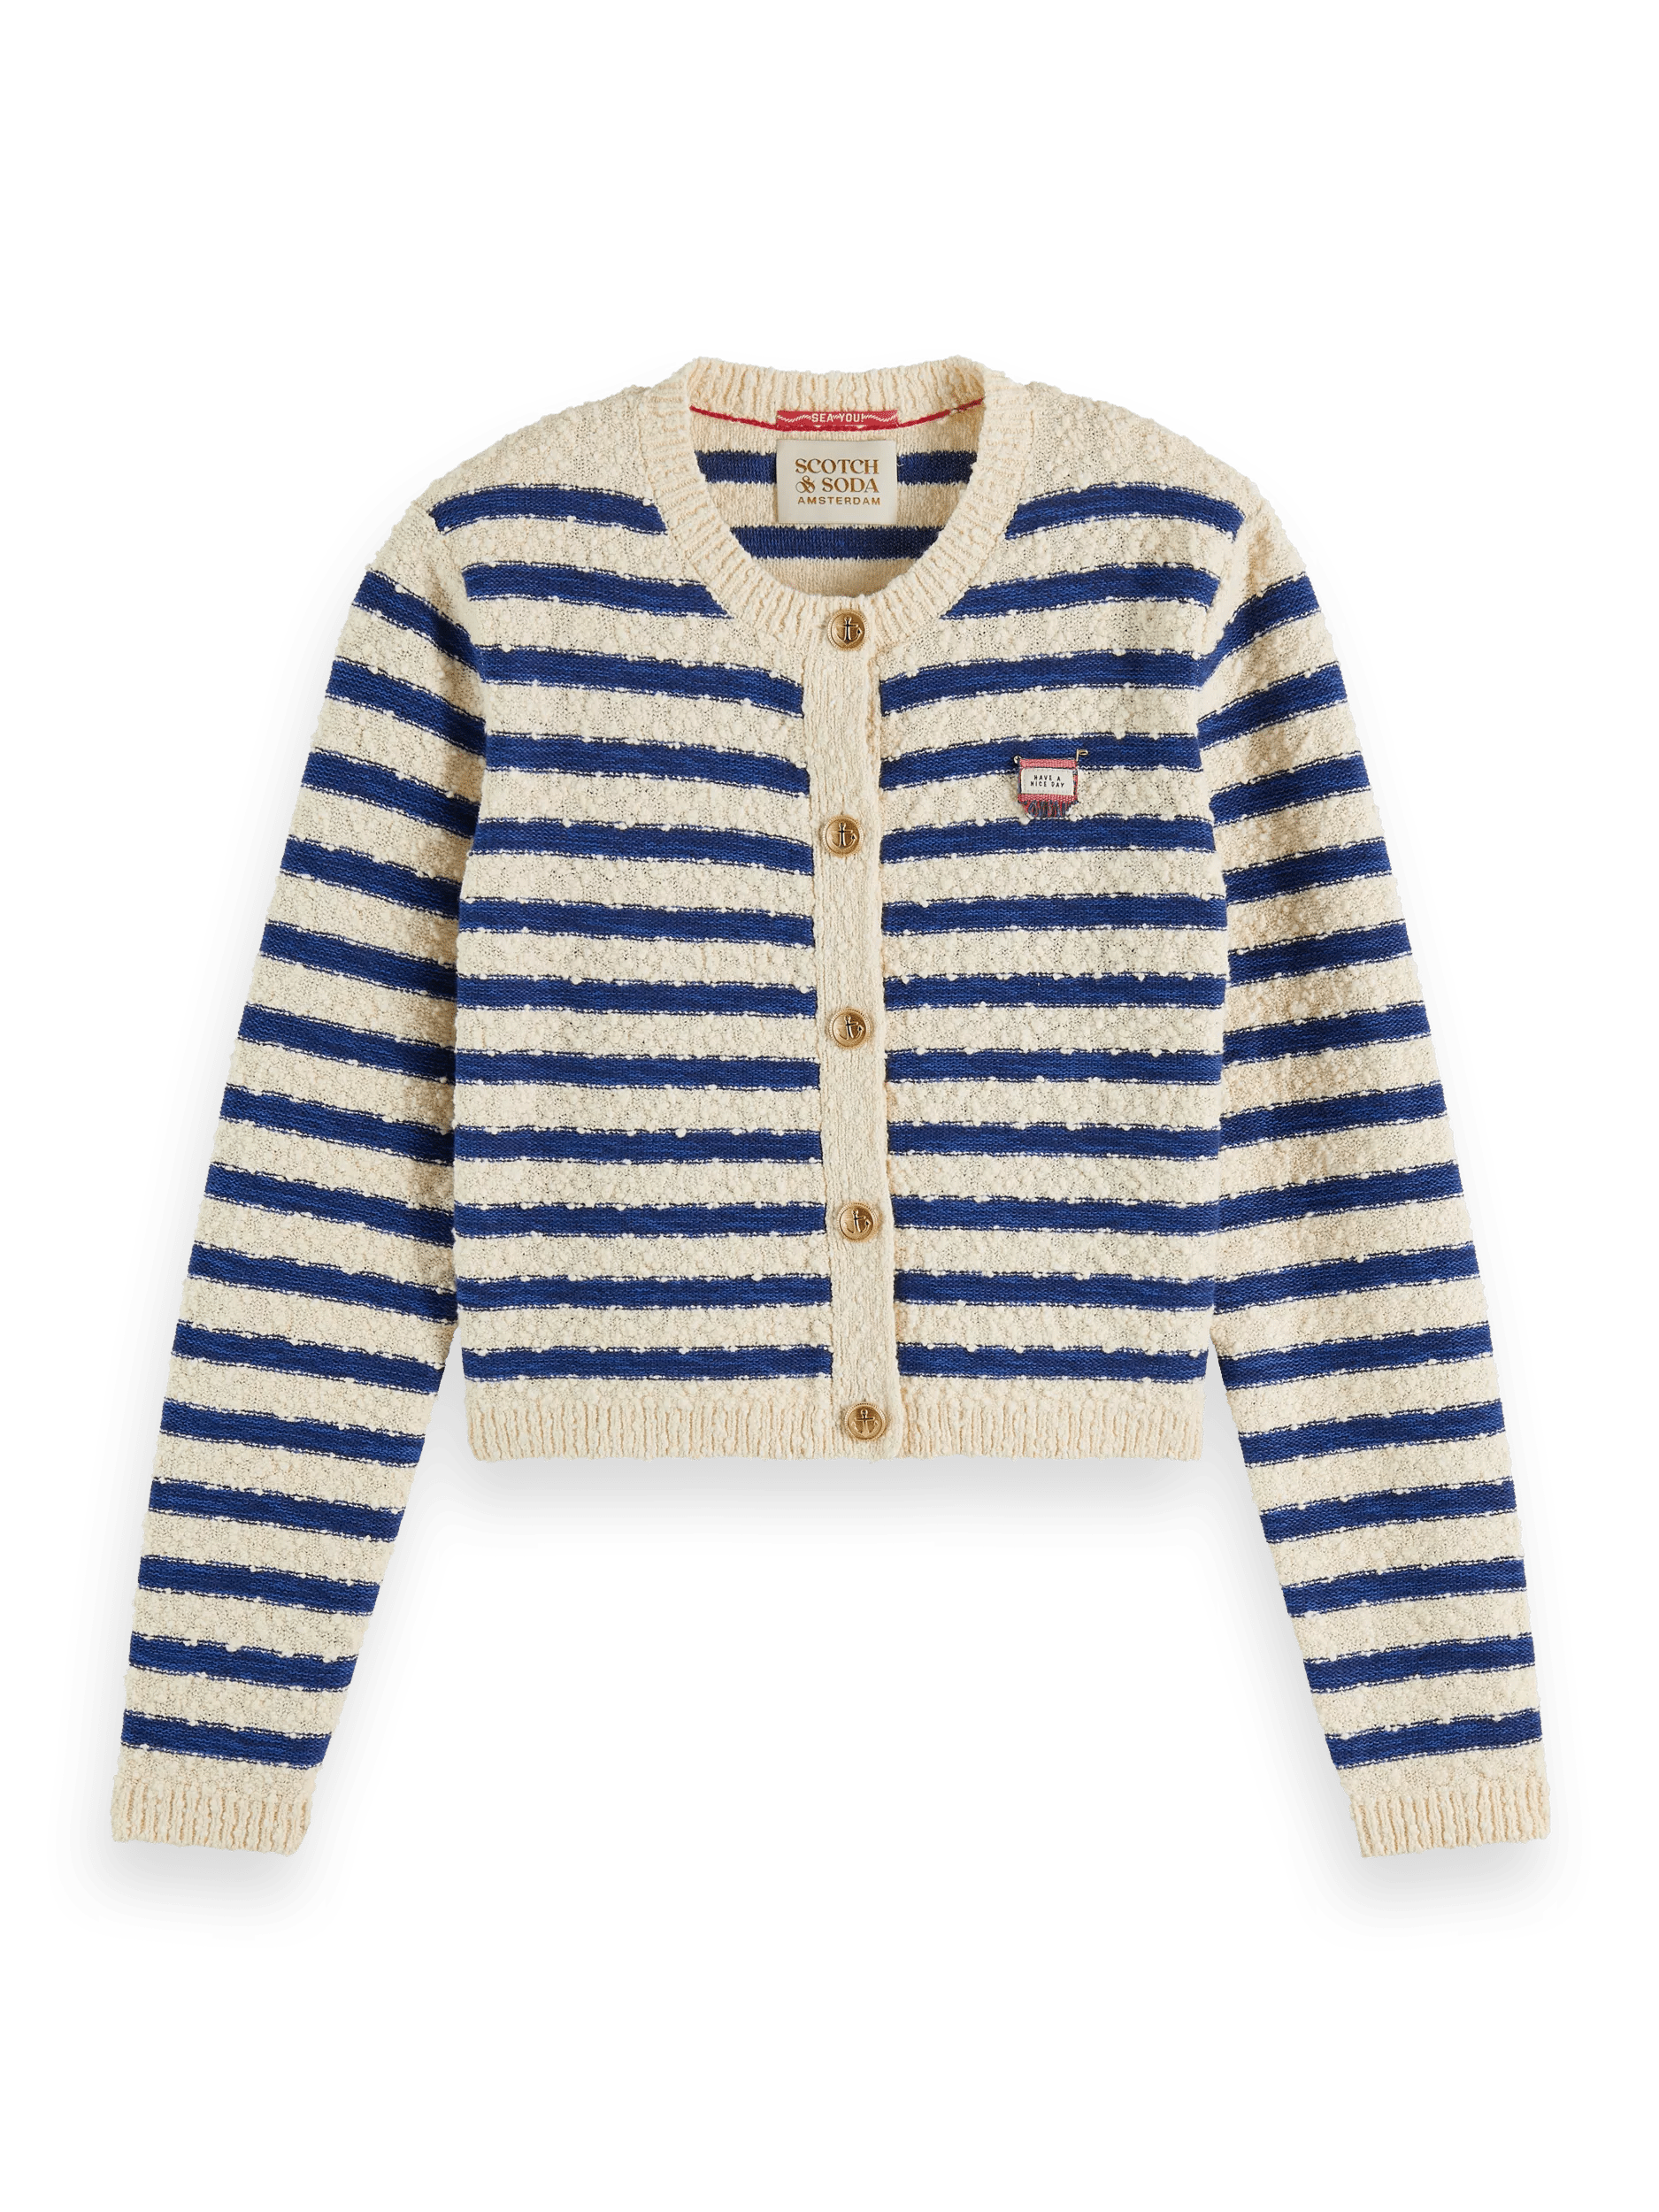 Scotch & Soda Textured Breton stripe cardigan FNT